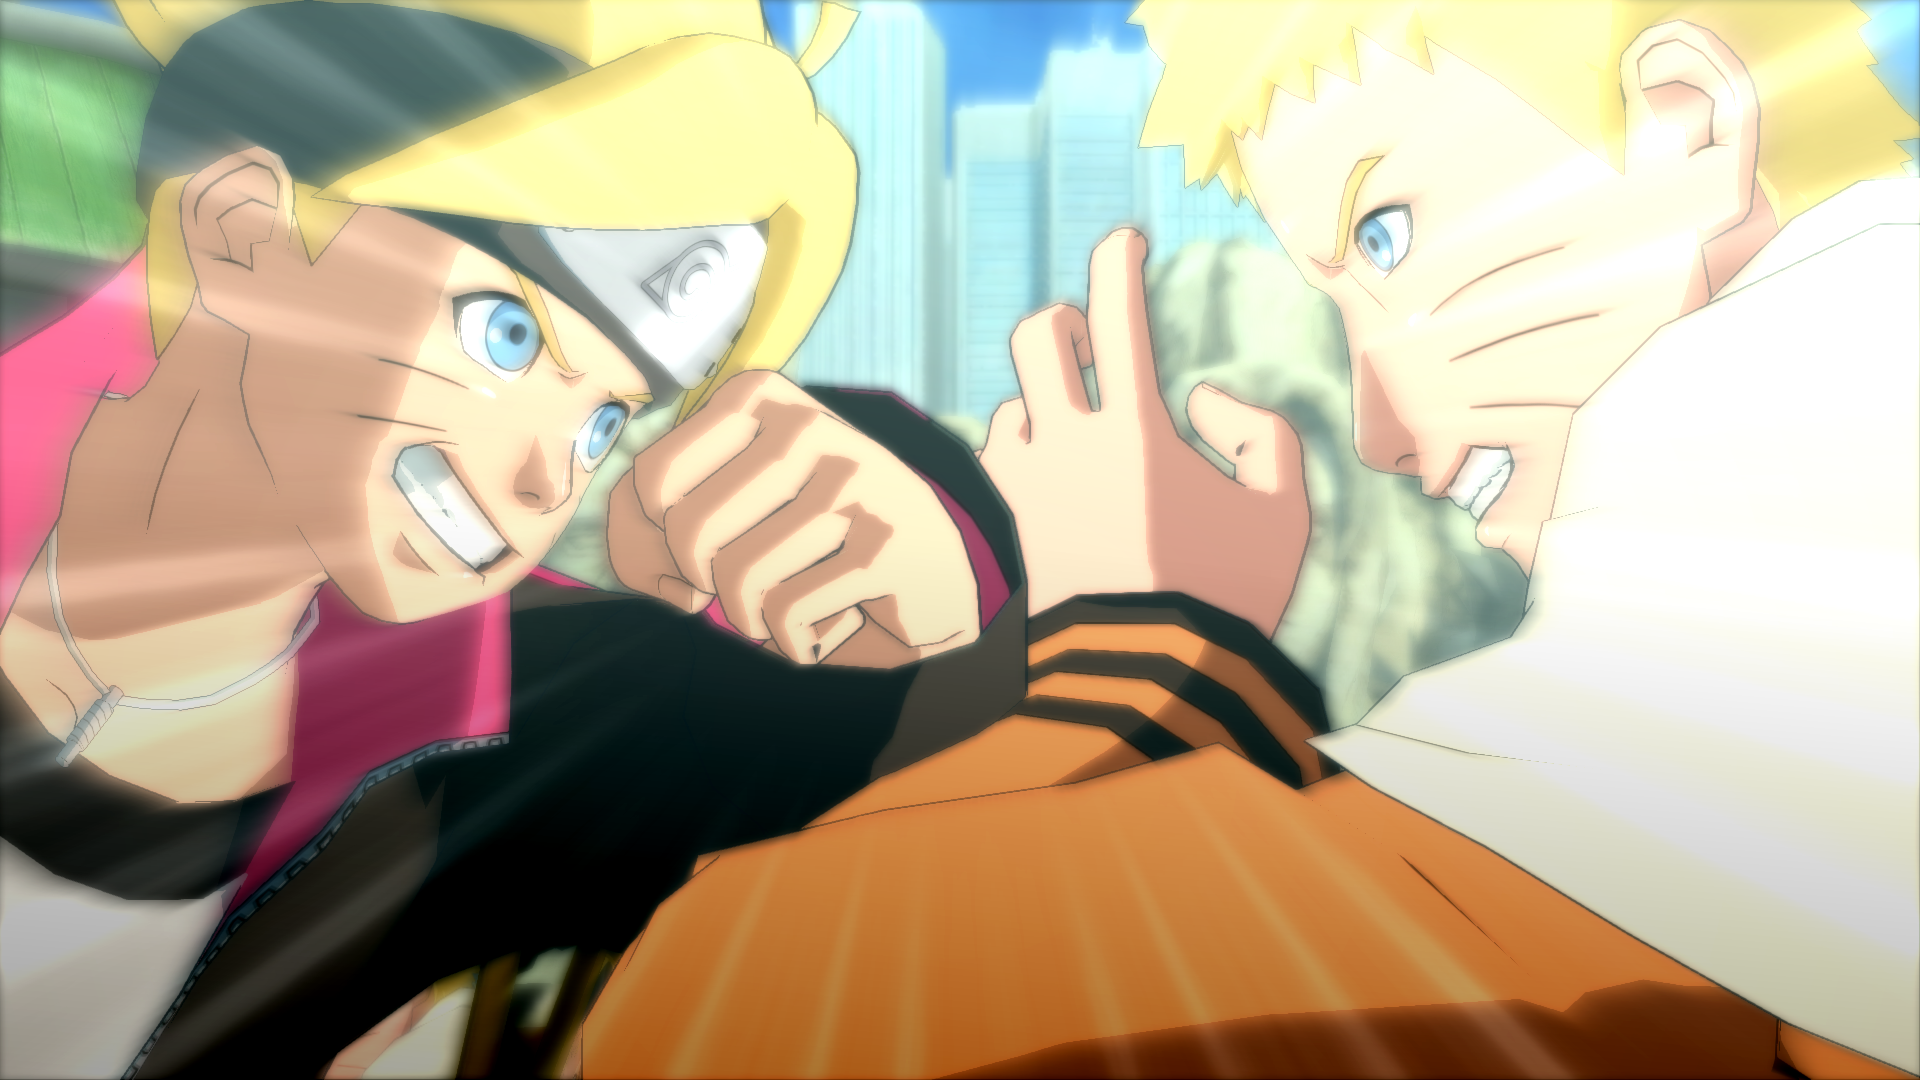 Naruto Shippuden: Ultimate Ninja Storm 4 Road to Boruto (Switch) - Review -  Portal do Nerd